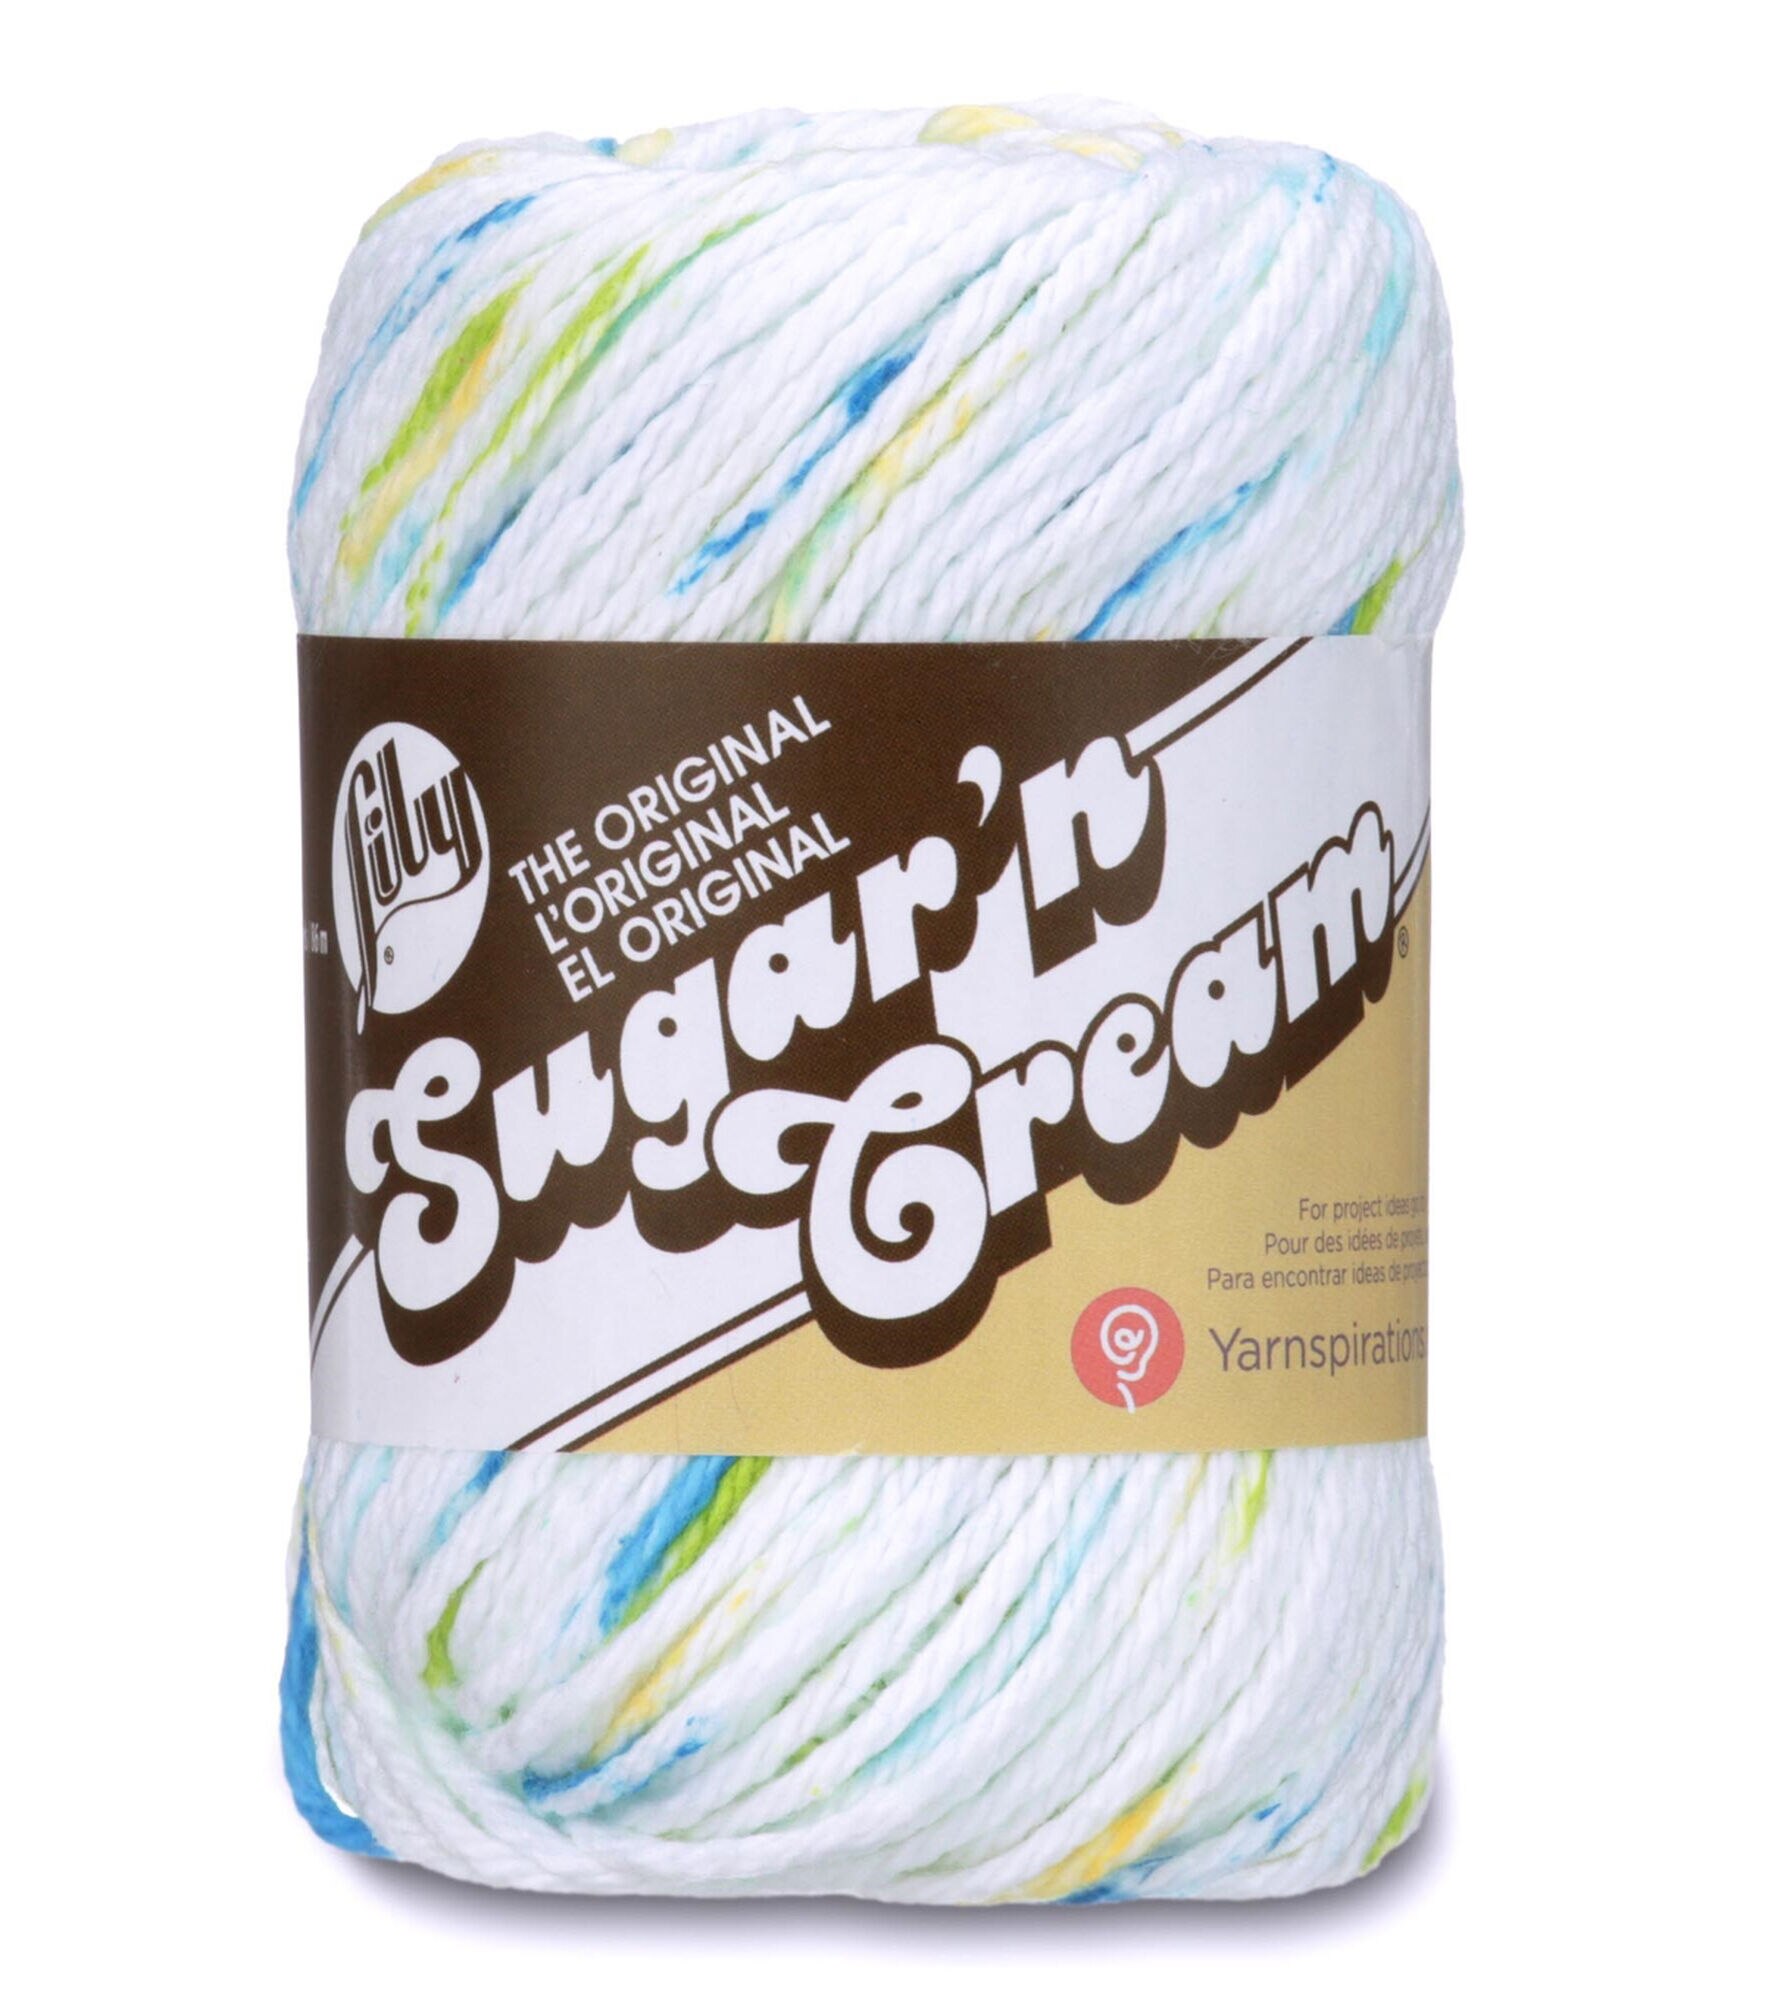 Lily Sugar'N Cream Hippi Yarn - 6 Pack of 57g/2oz - Cotton - 4 Medium  (Worsted) - 95 Yards - Knitting/Crochet